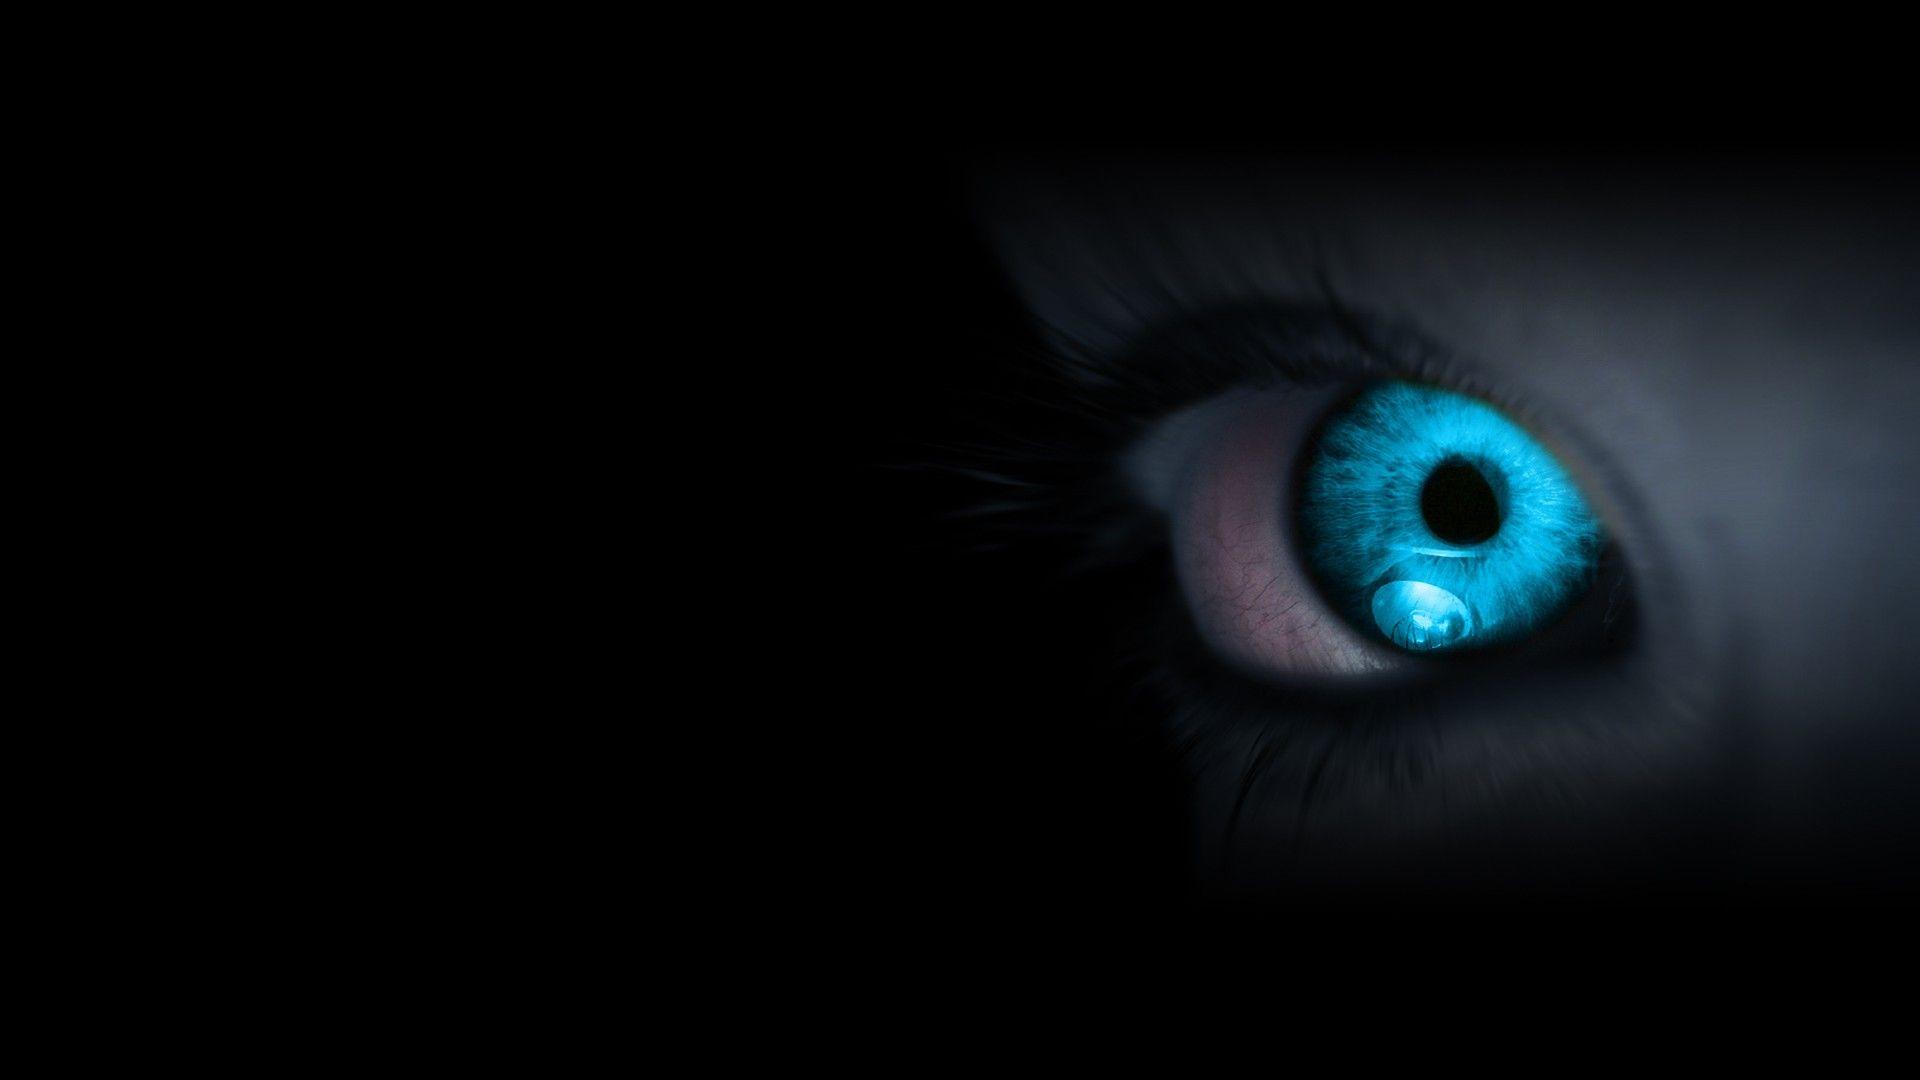 Glowing Eye, HD Artist, 4k Wallpaper, Image, Background, Photo